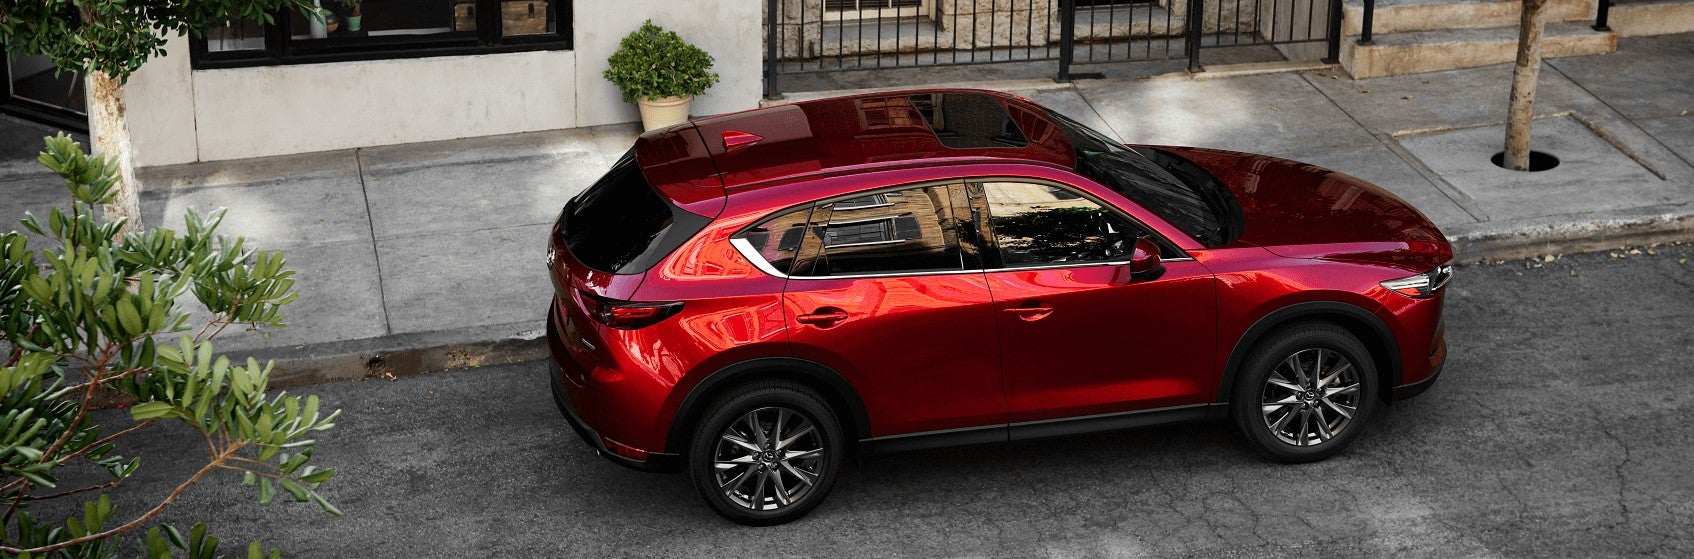 Mazda Certified Pre-Owned Dealer near Portsmouth VA